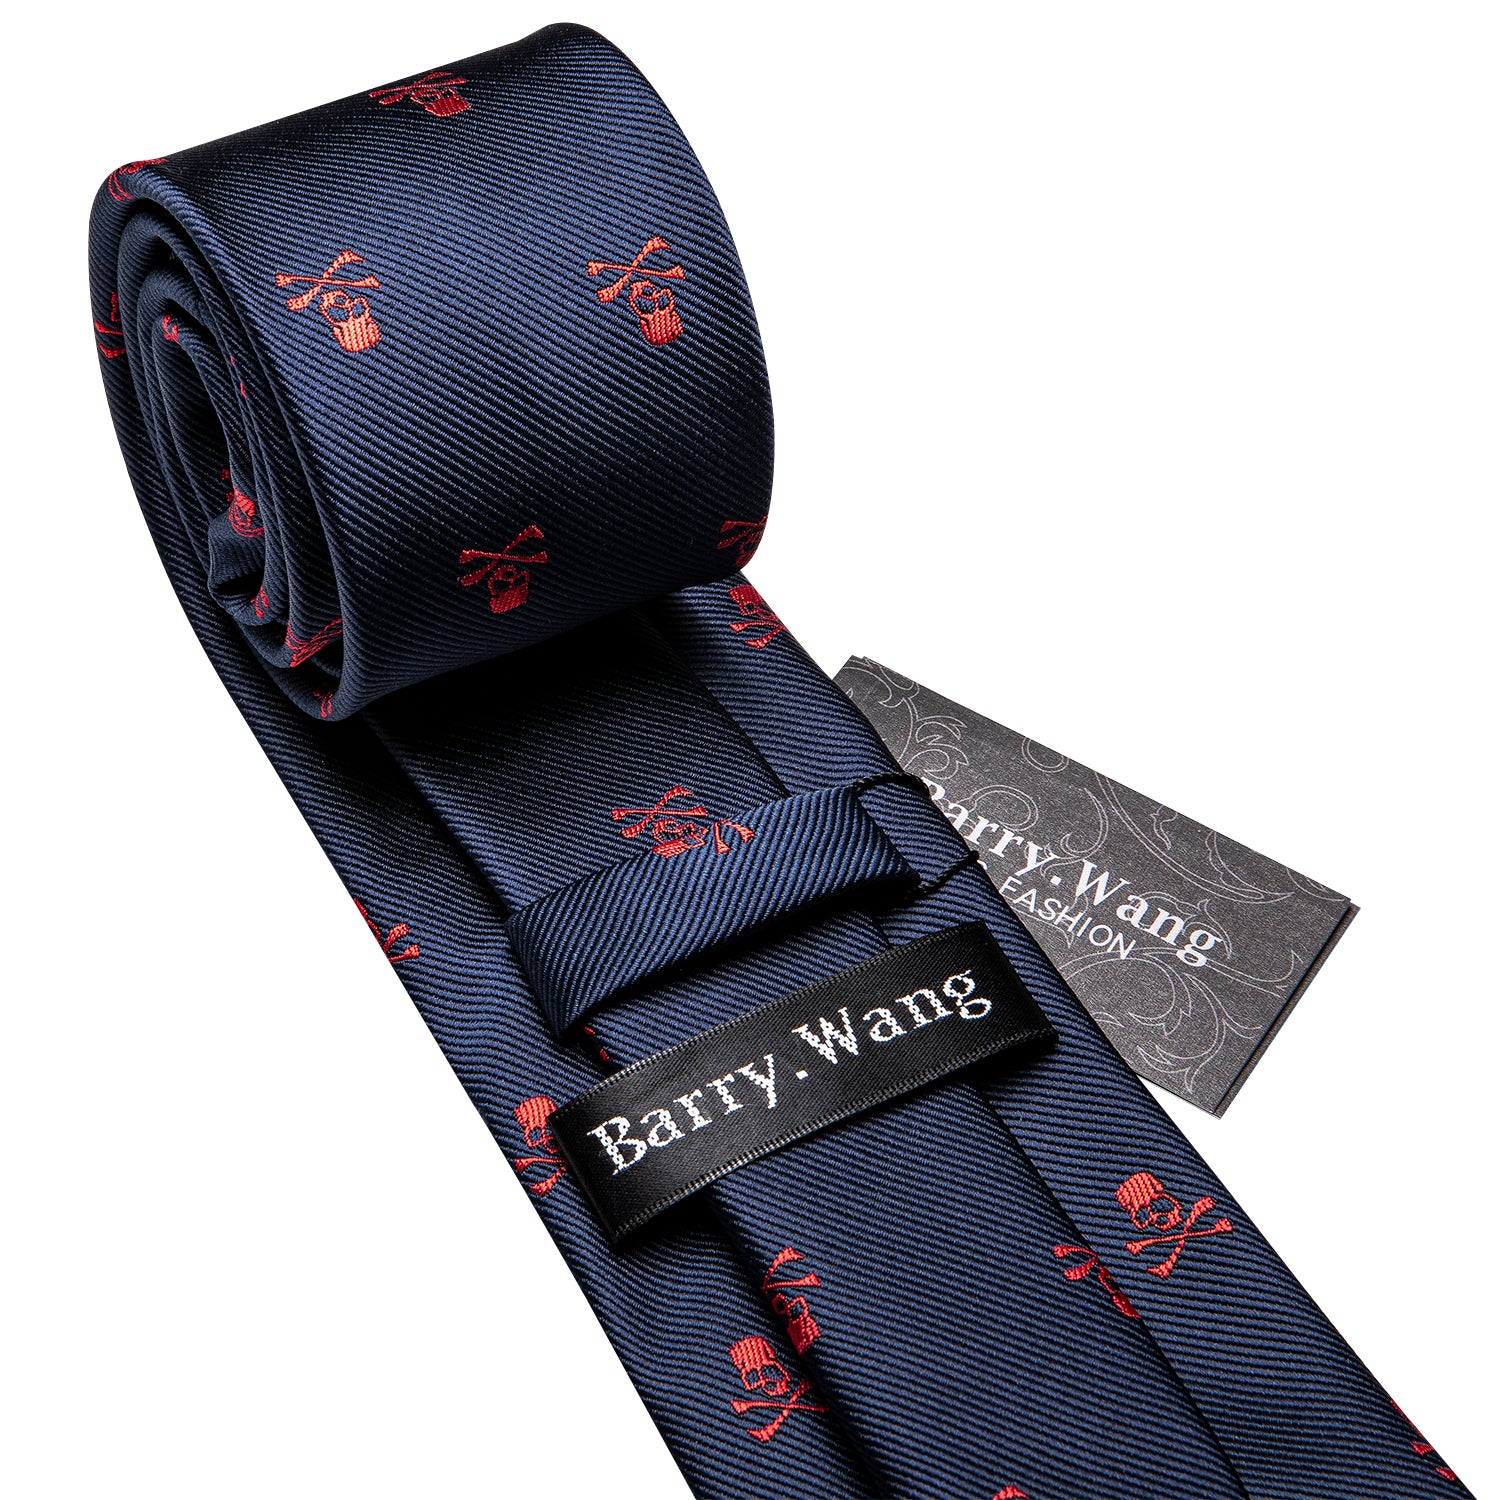 Novelty Red Skull Blue Tie Tie Hanky Cufflinks Set